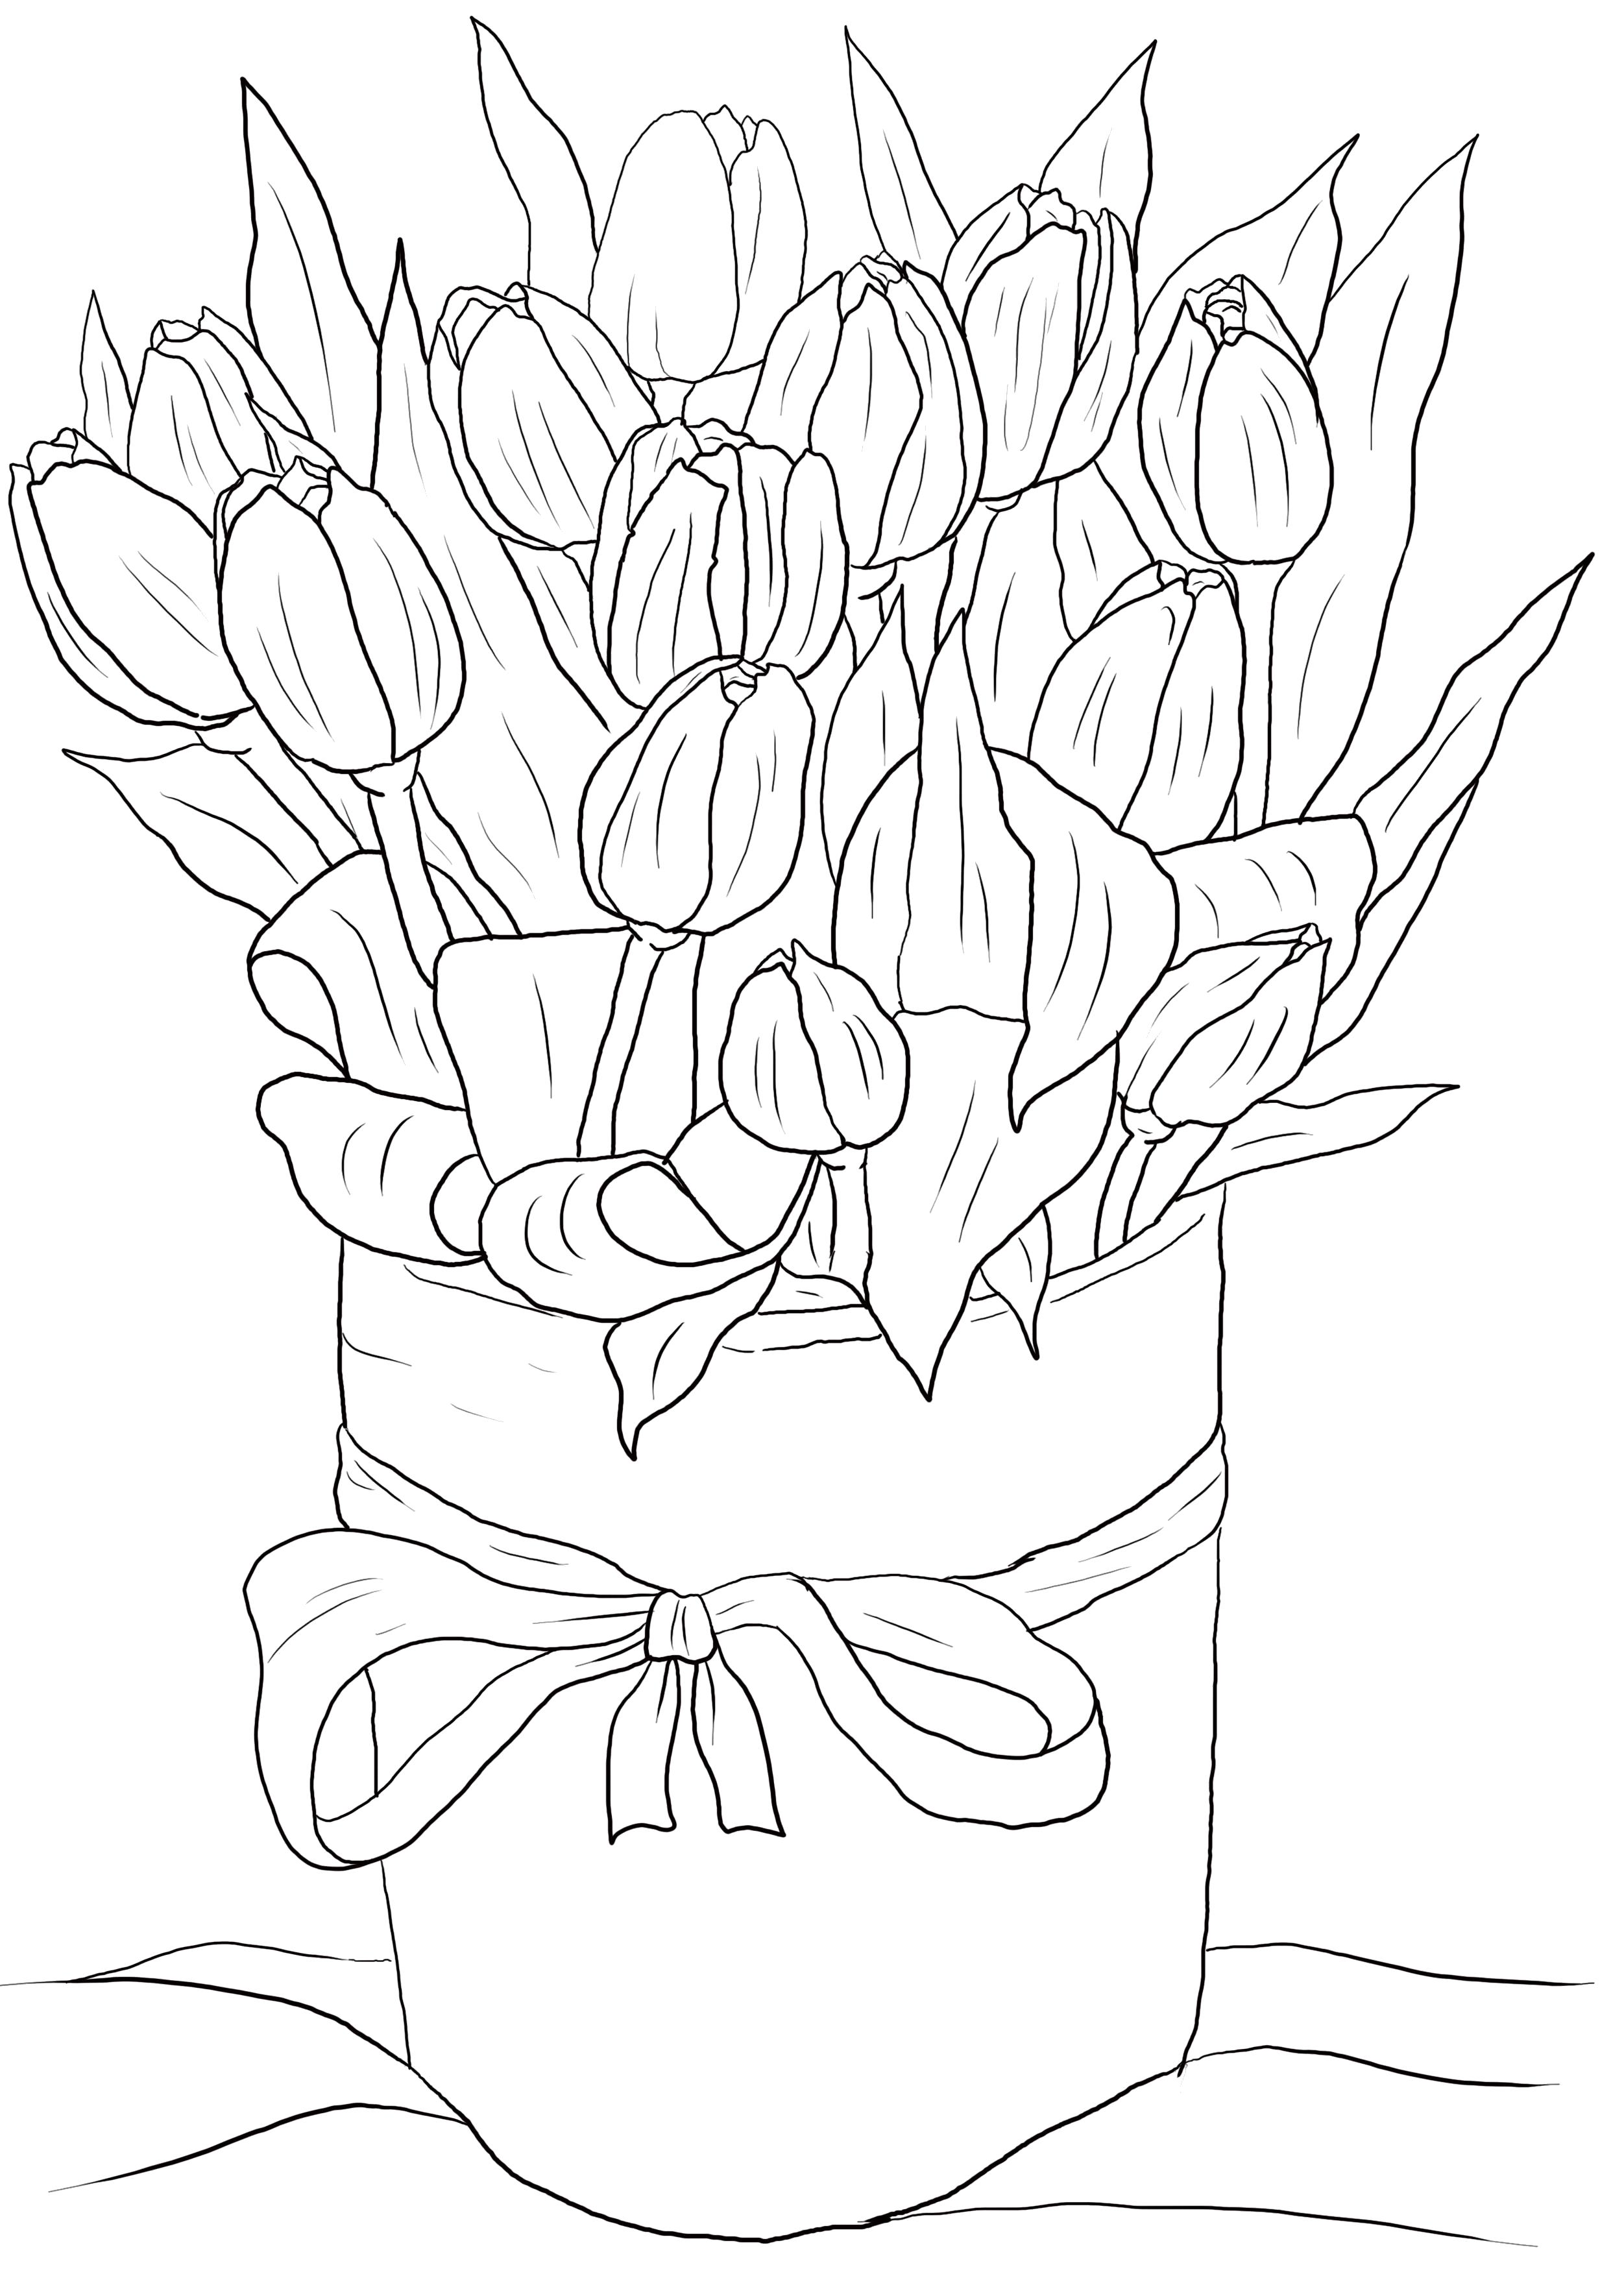 Название: Раскраска букет цветов. Категория: 8 марта. Теги: 8 марта.